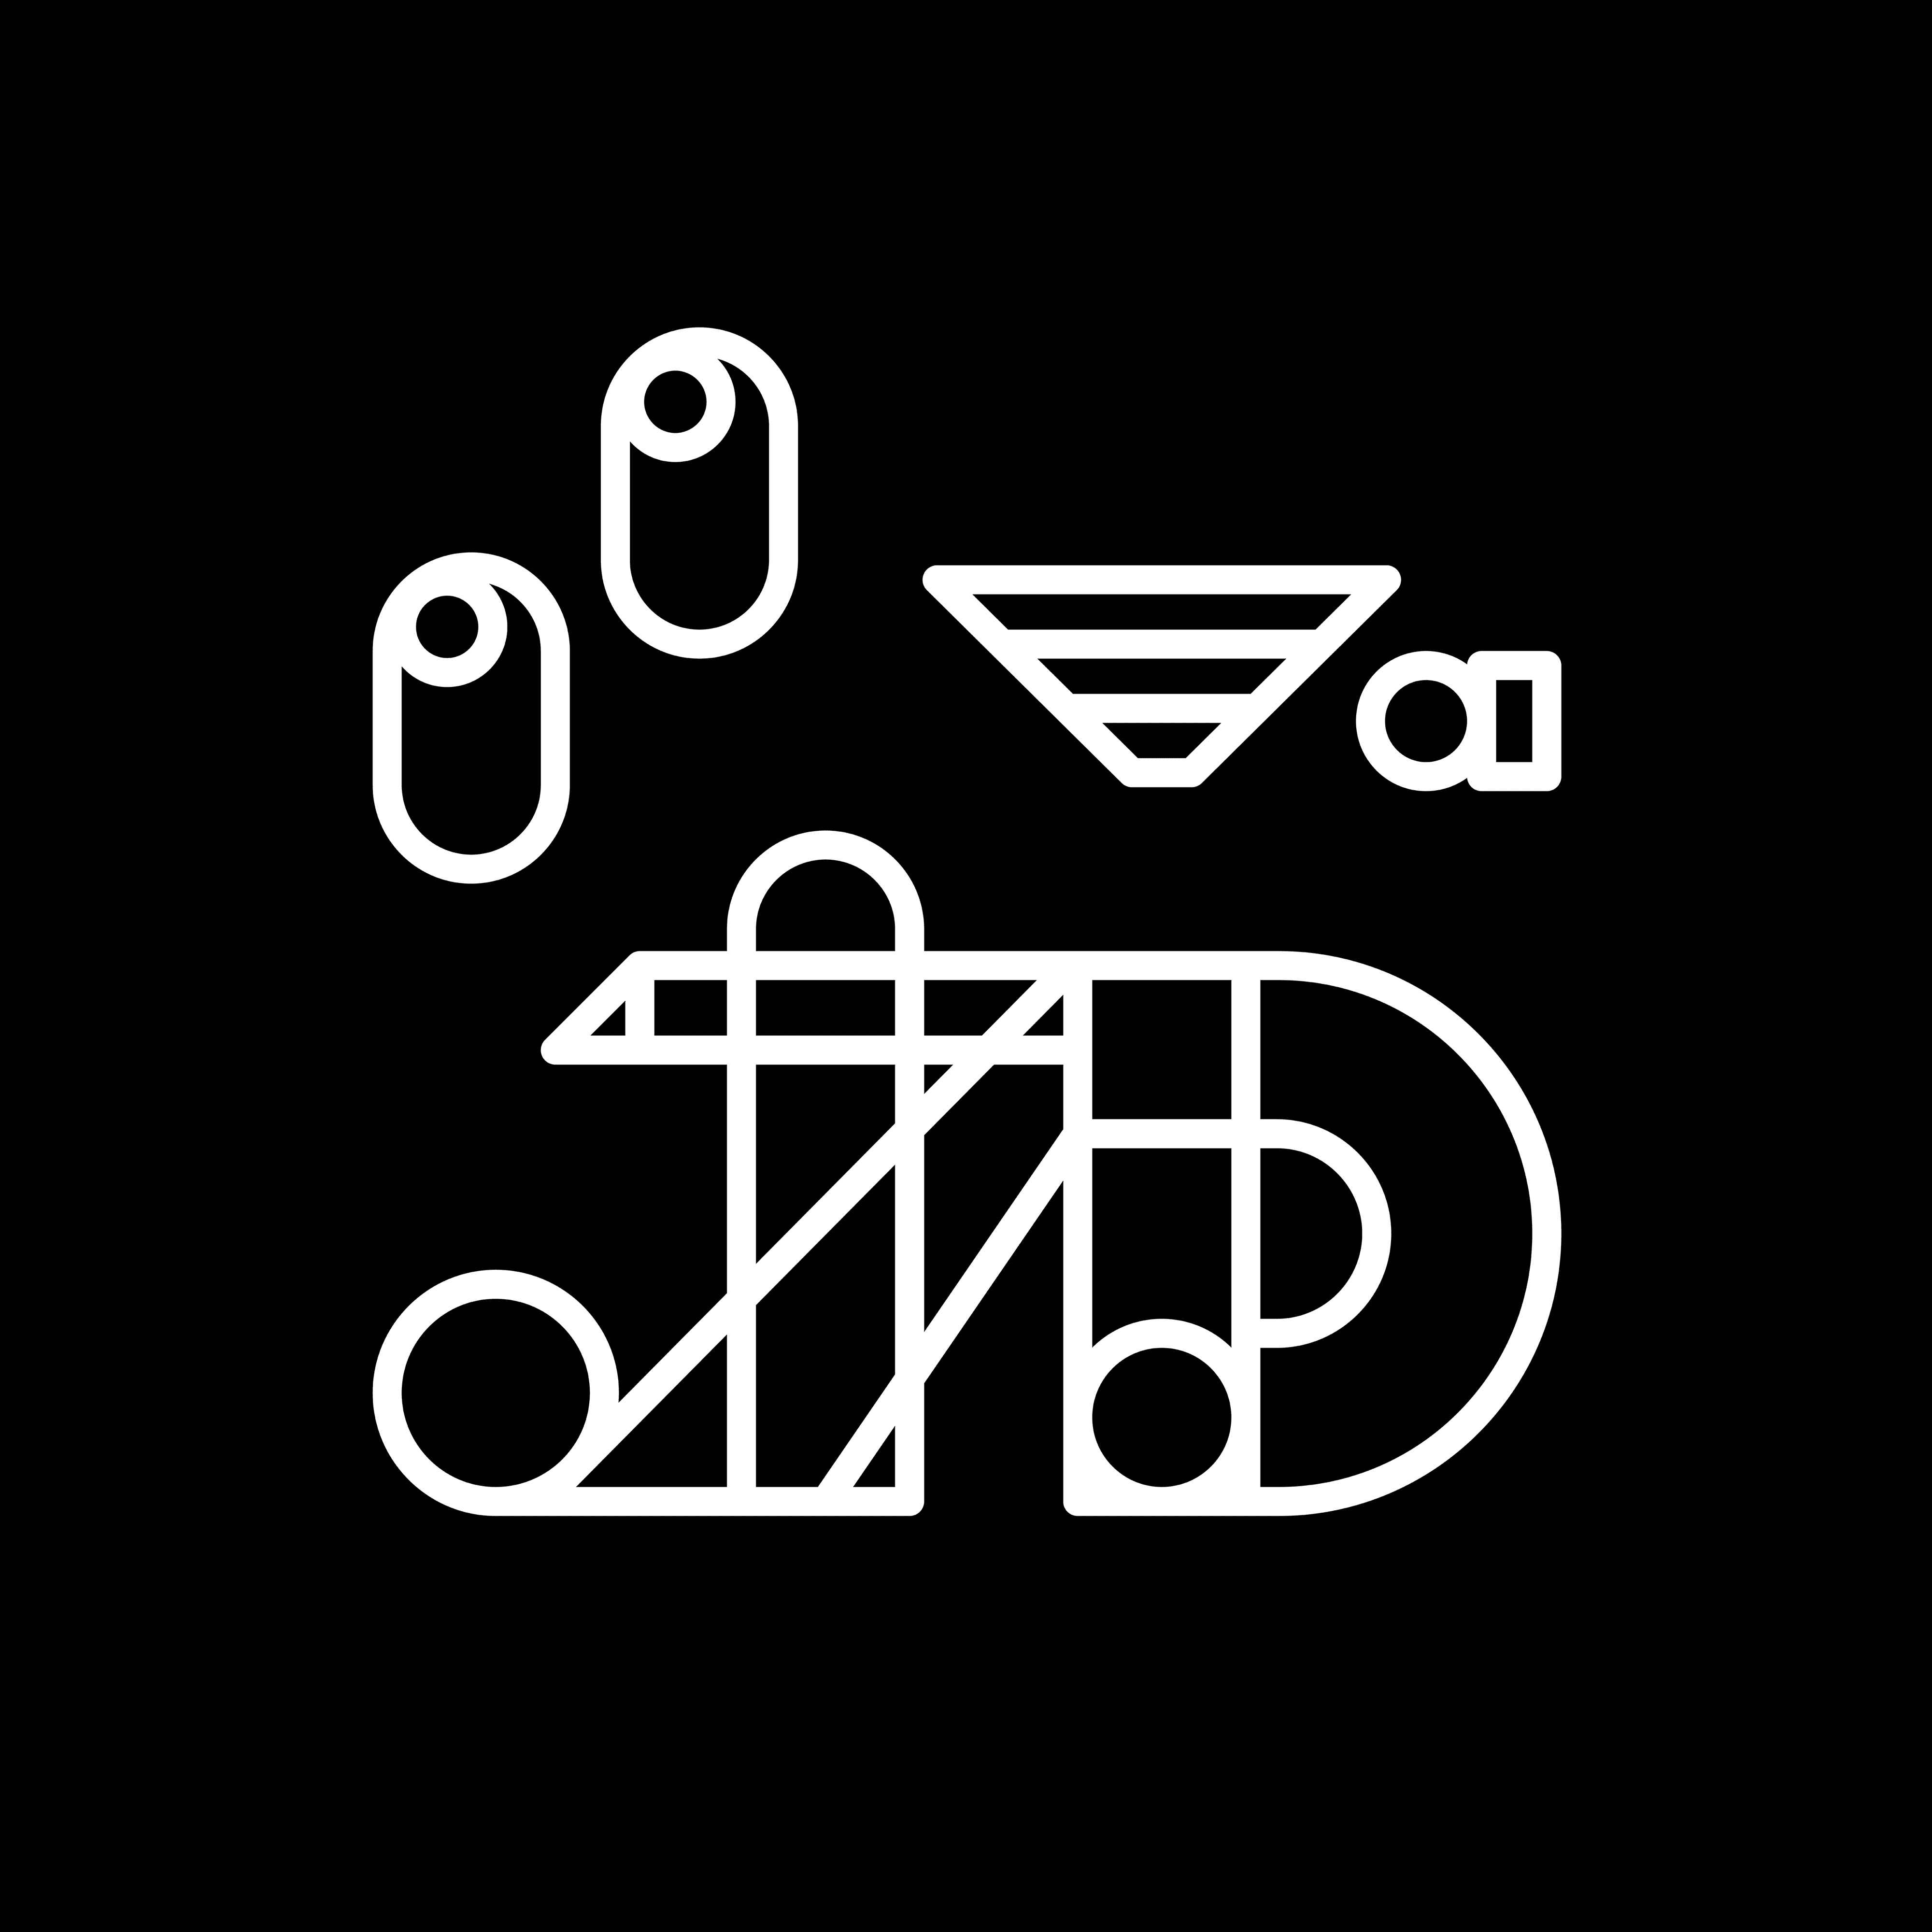 Tokyo Typography “Wa”